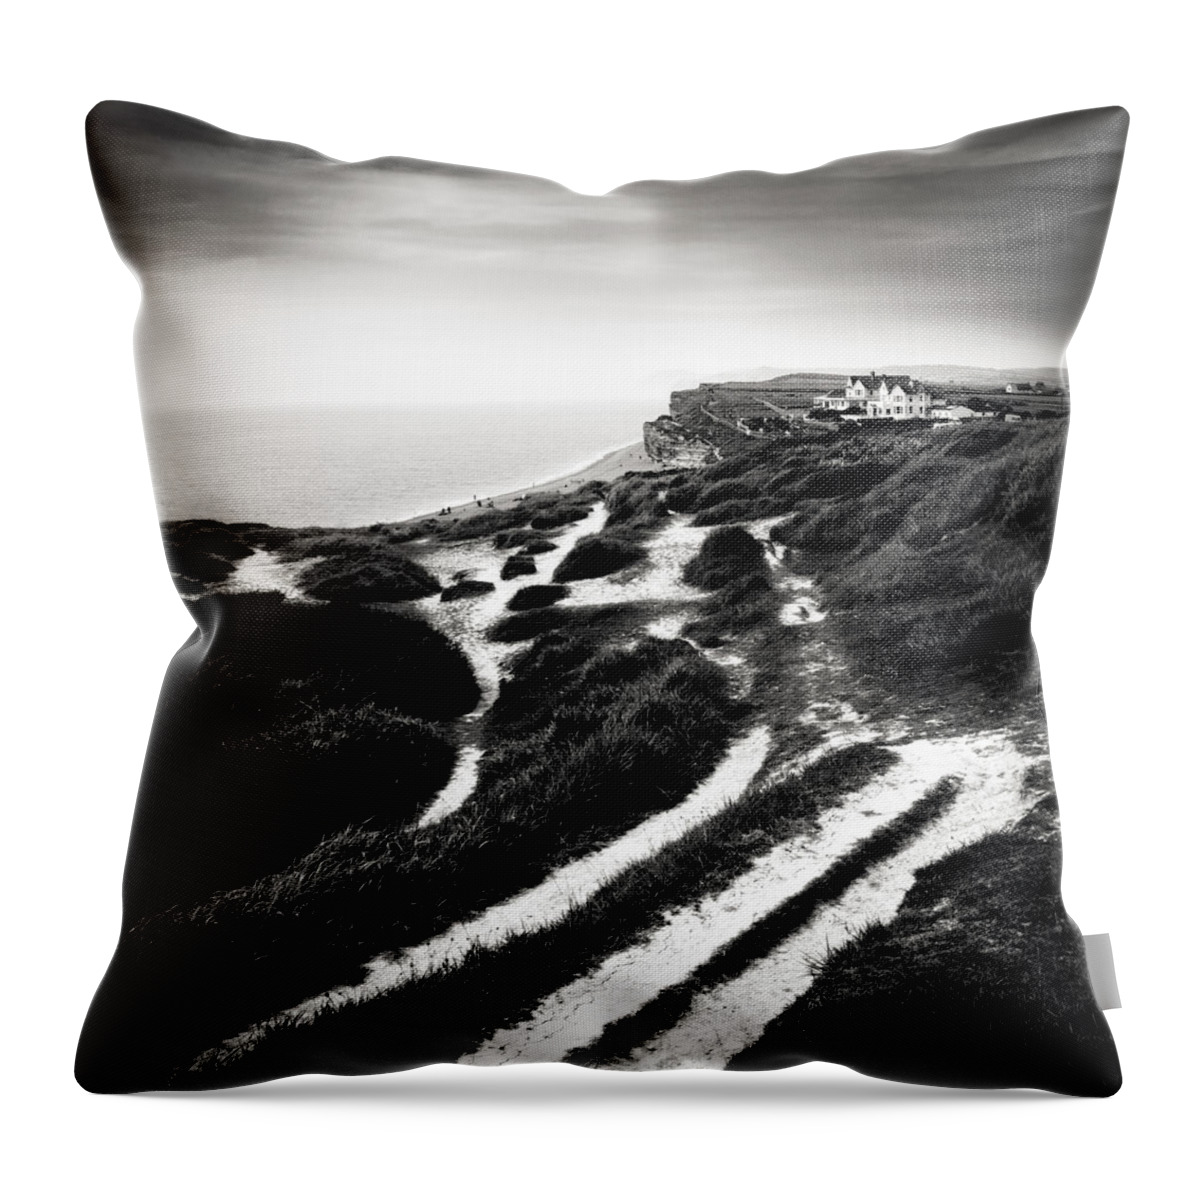 Burton Bradstock Throw Pillow featuring the photograph Coastal Path by Dorit Fuhg